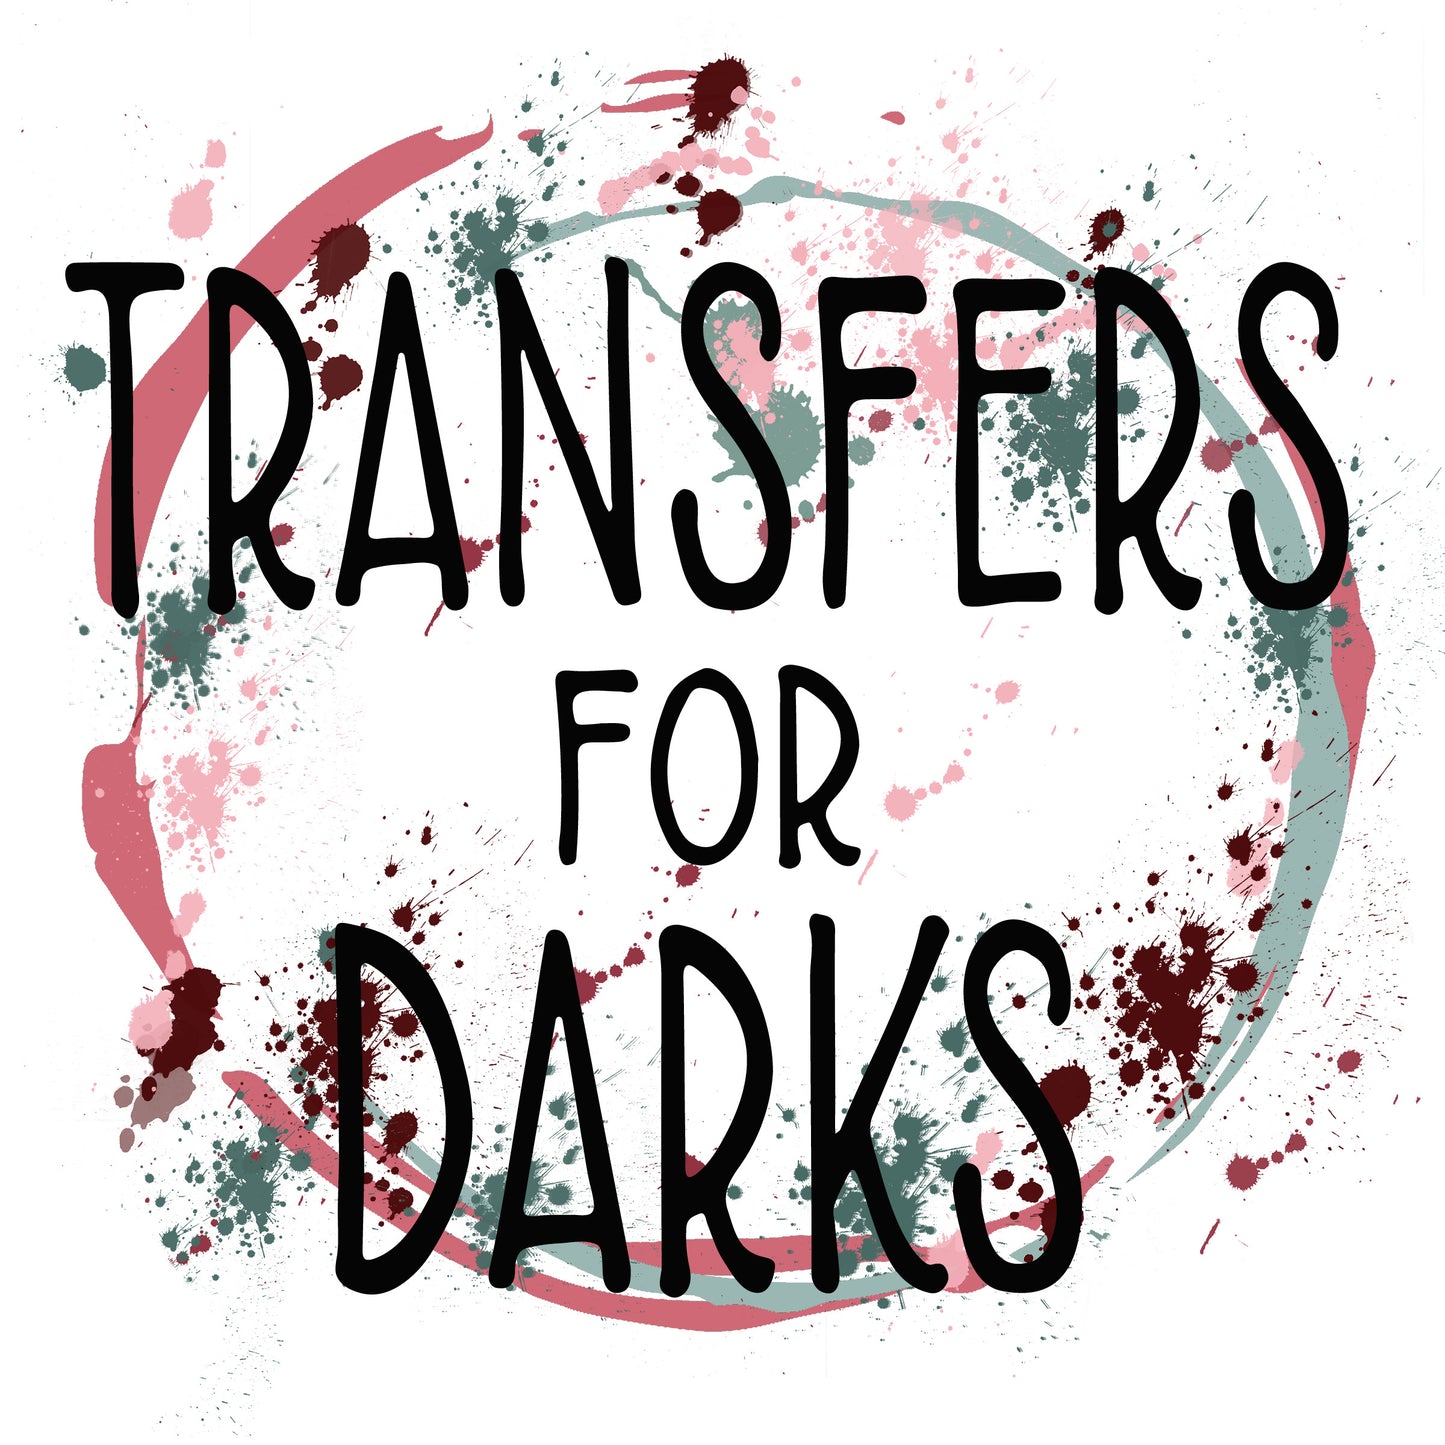 Transfers for Darks